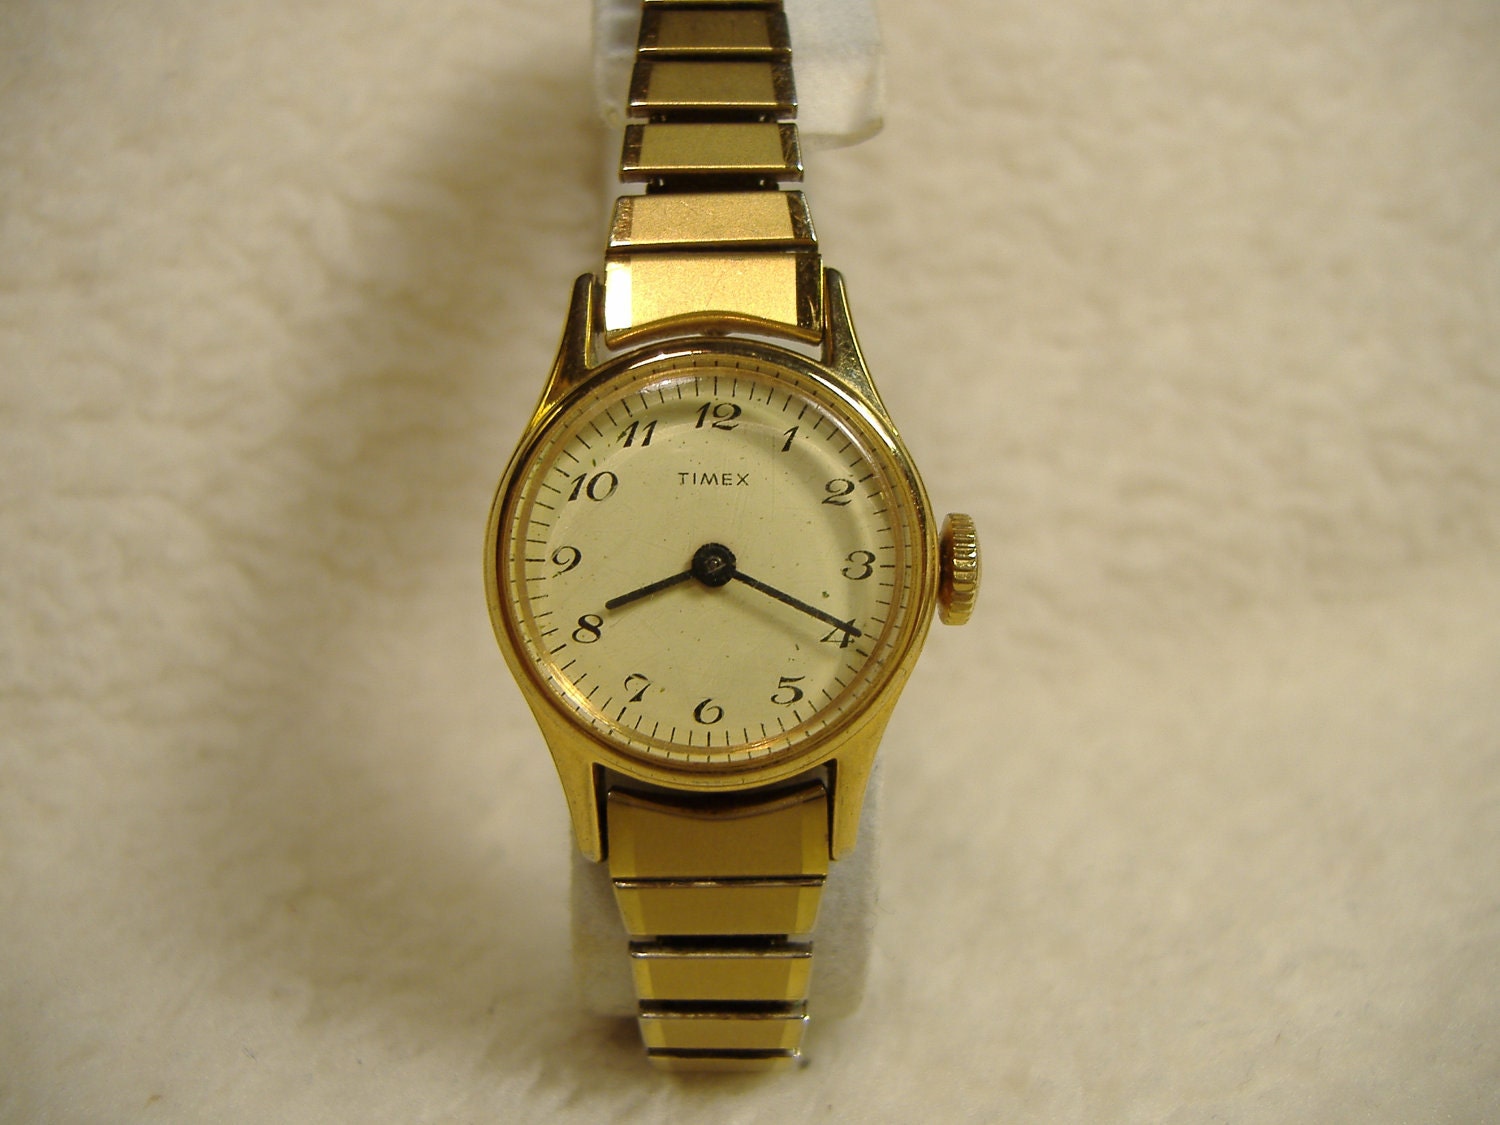 Vintage 1970s Timex Manual Wind Watch.